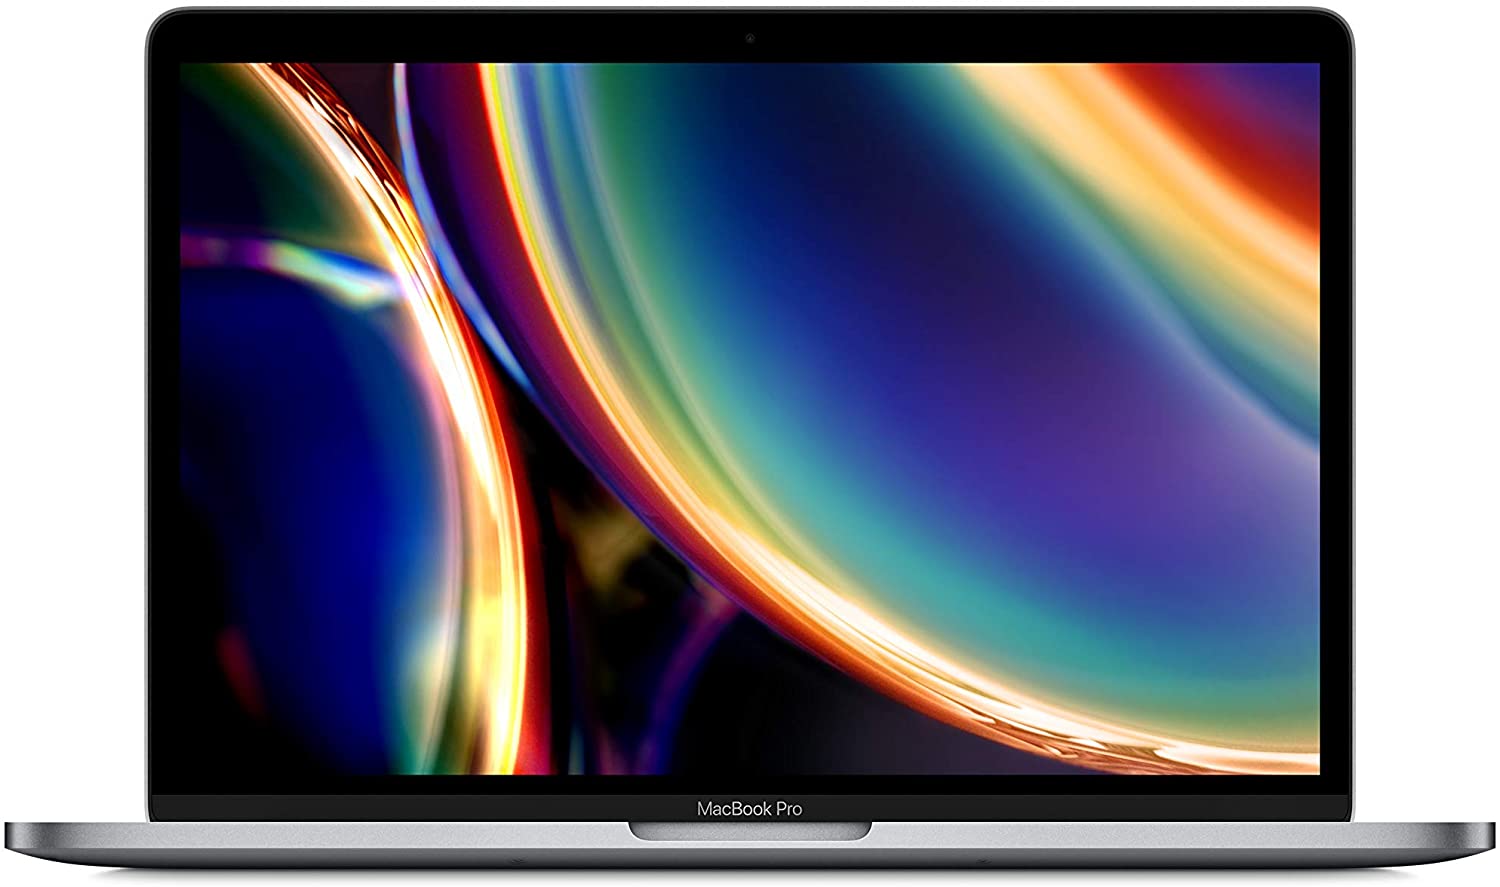 apple macbook pro 13, space grey - a photo